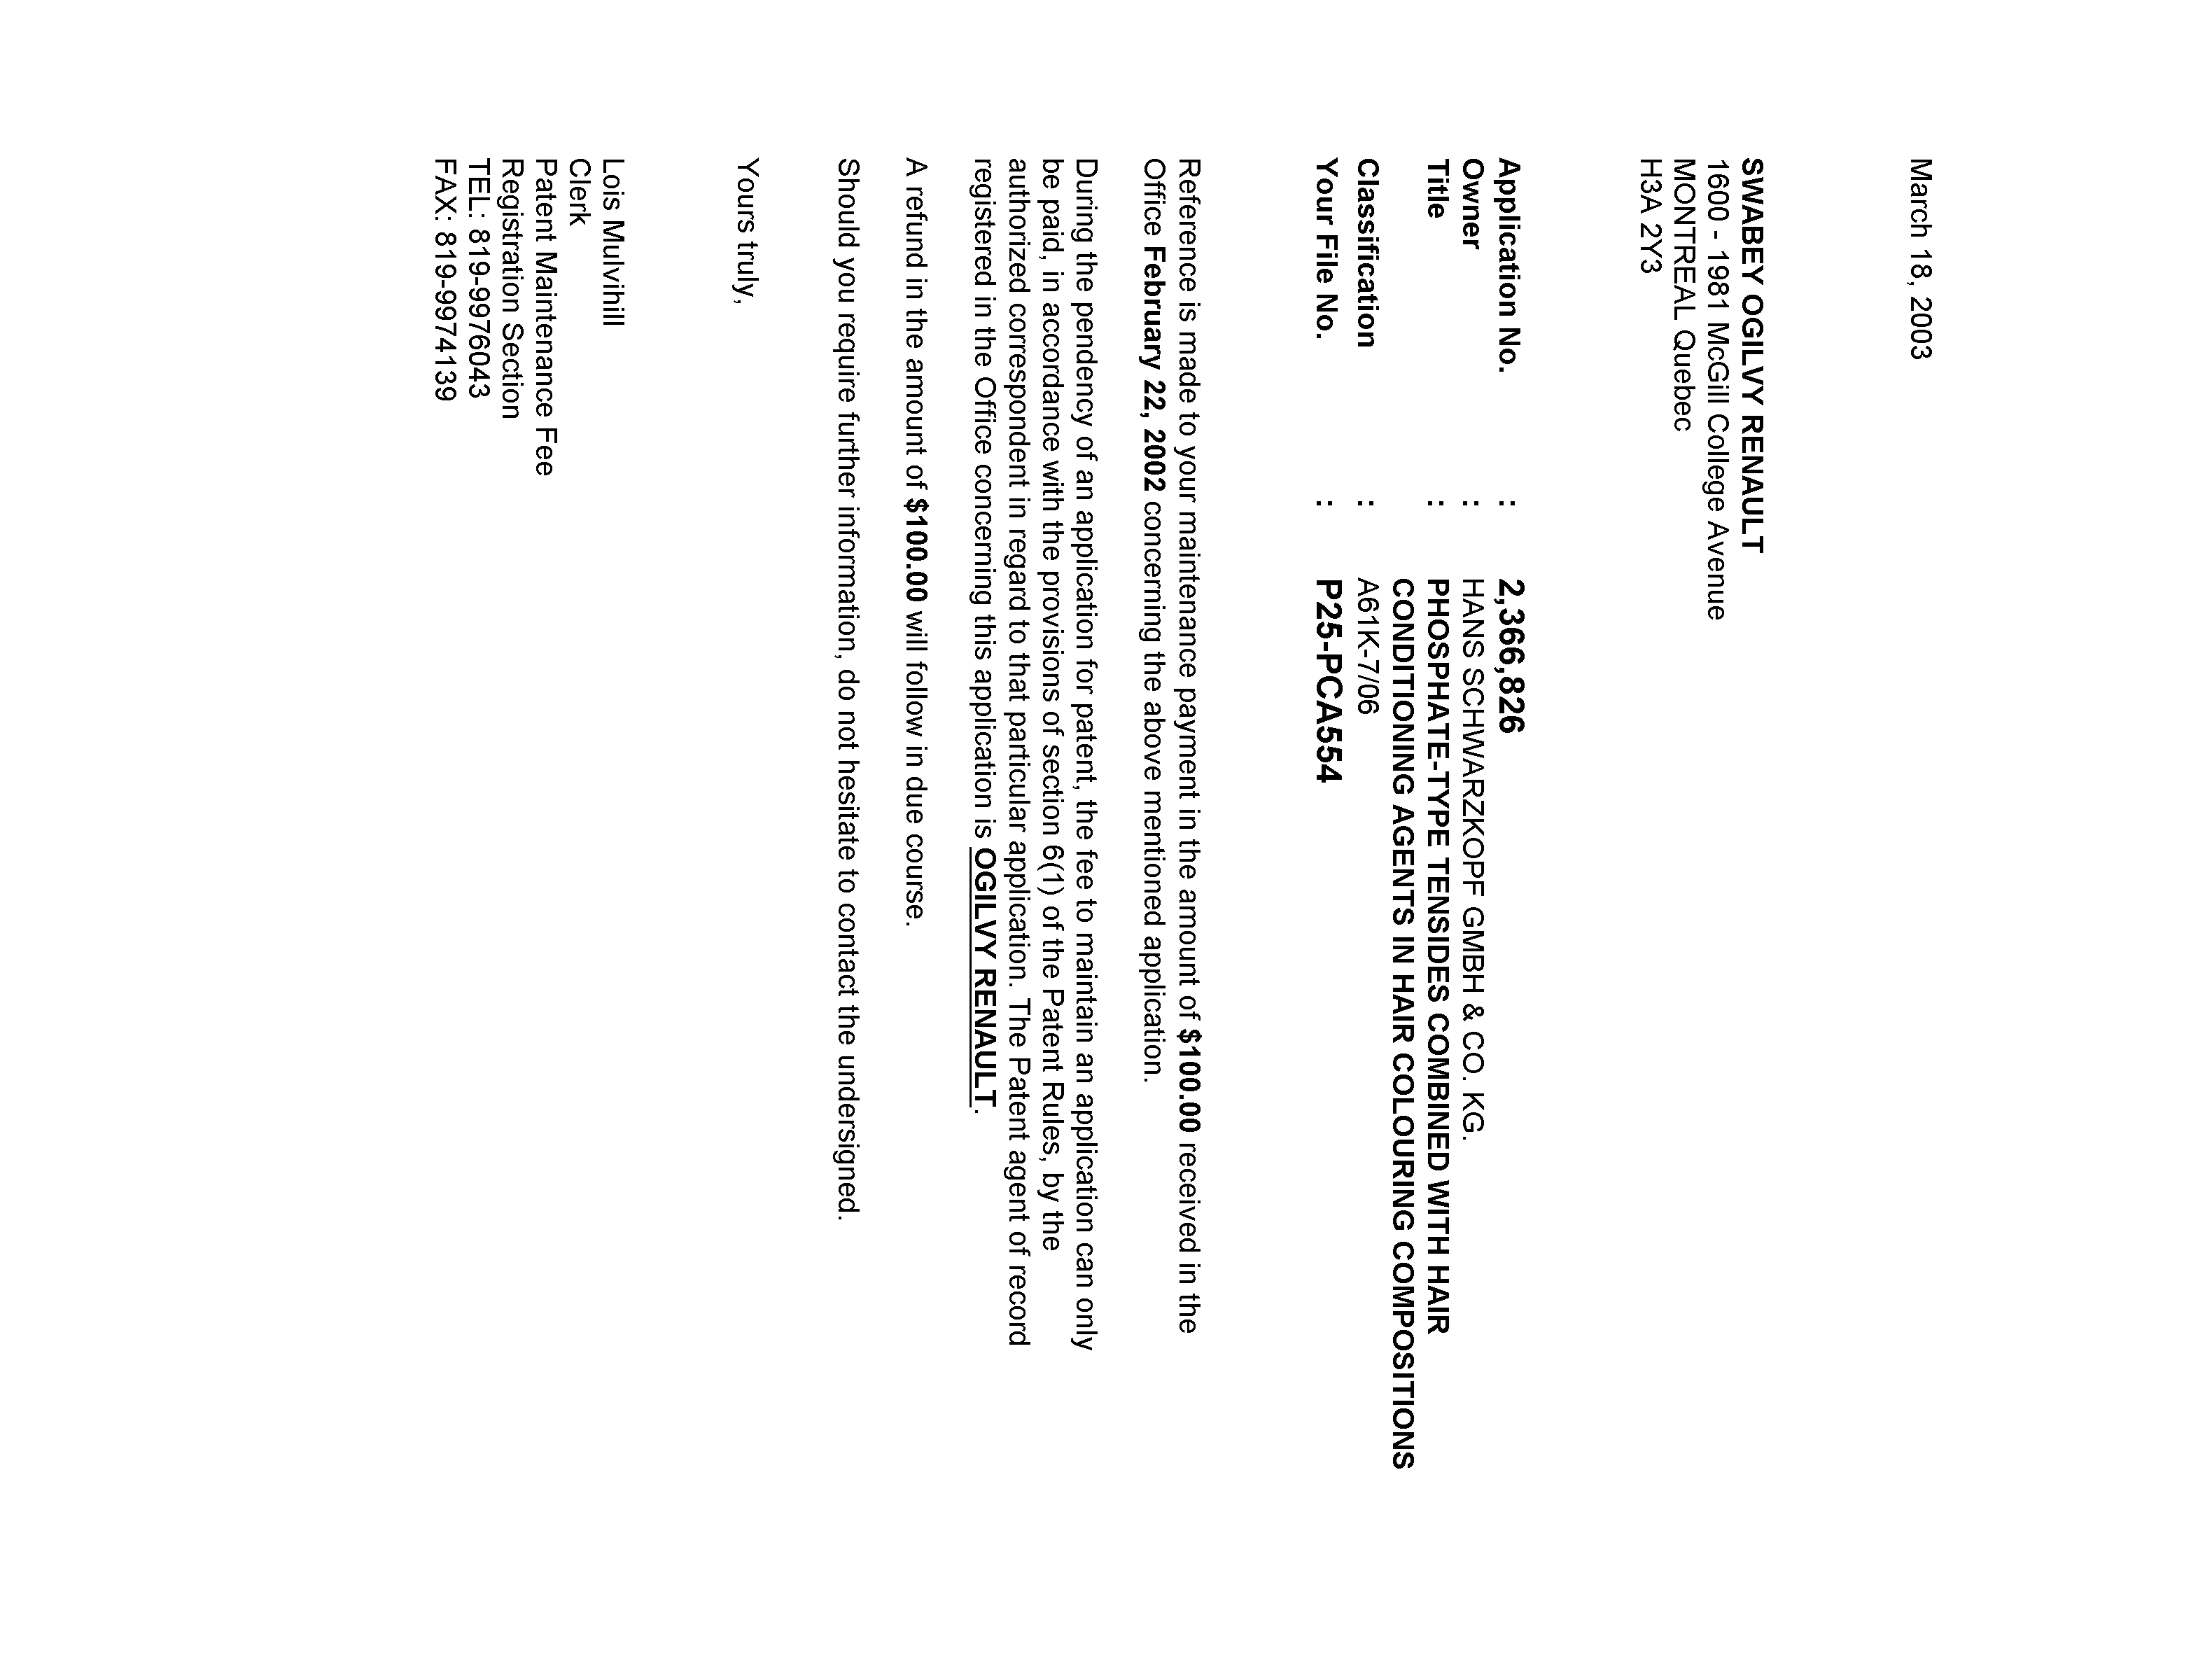 Canadian Patent Document 2366826. Correspondence 20021218. Image 1 of 1